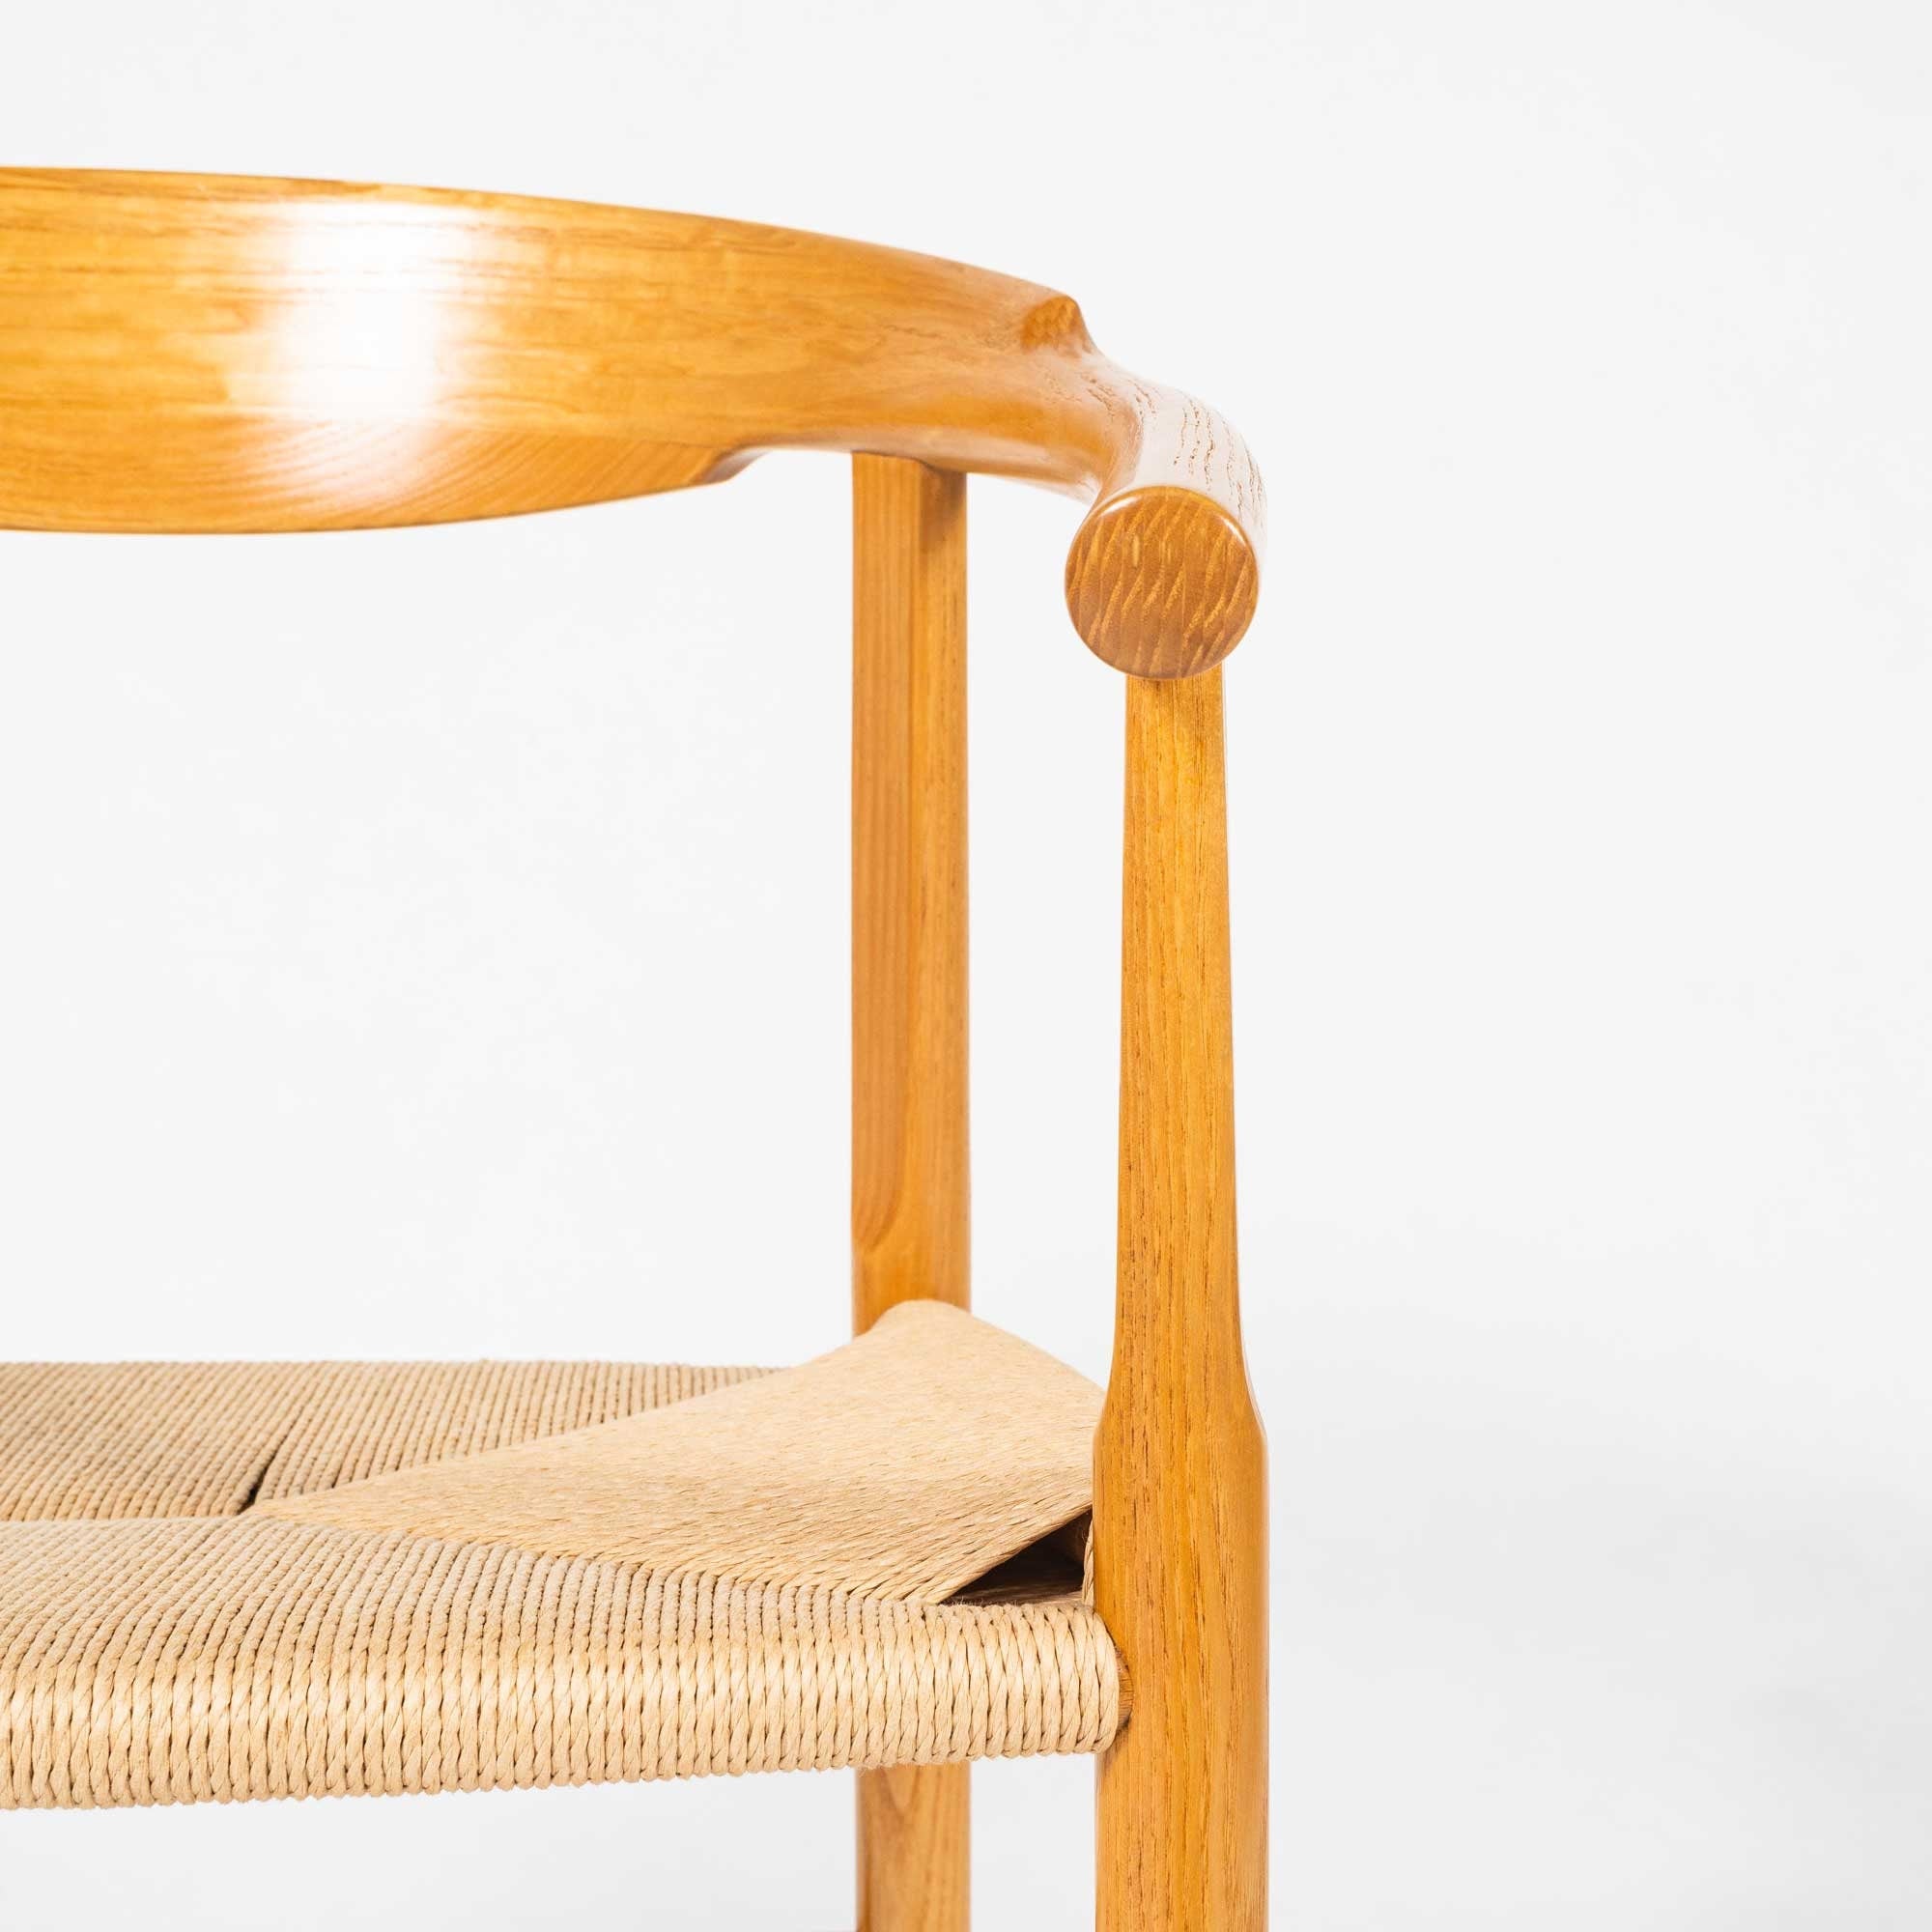 Set of 4 Hans Wegner for PP Møbler PP 209 Chairs in Oiled Oak & Papercord